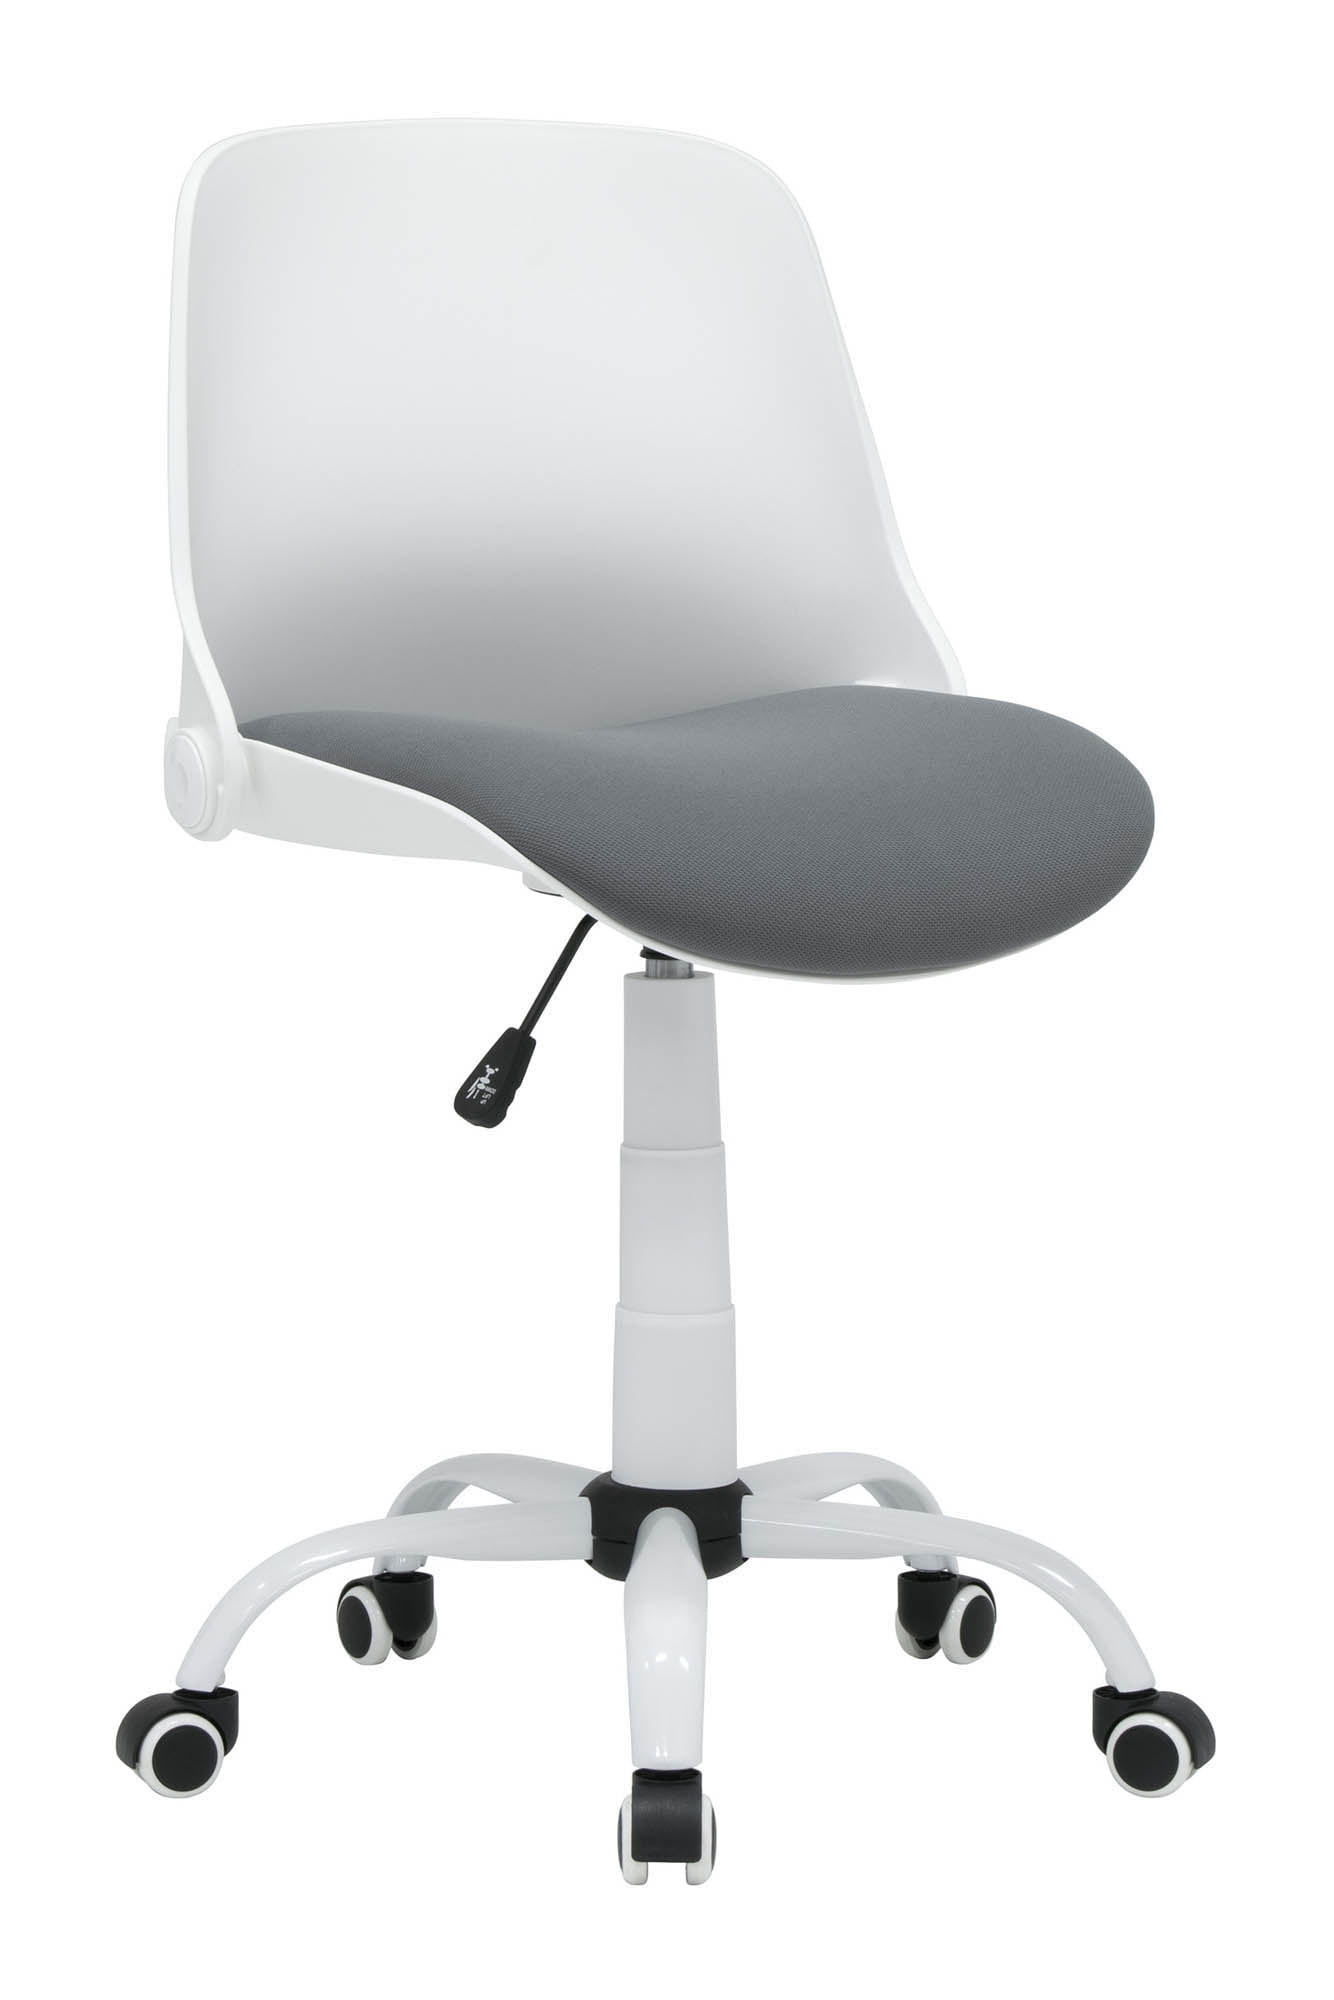 Ambient tandarts Veraangenamen Offex Folding Back Modern Swivel Office Task Chair - White, Grey -  Walmart.com